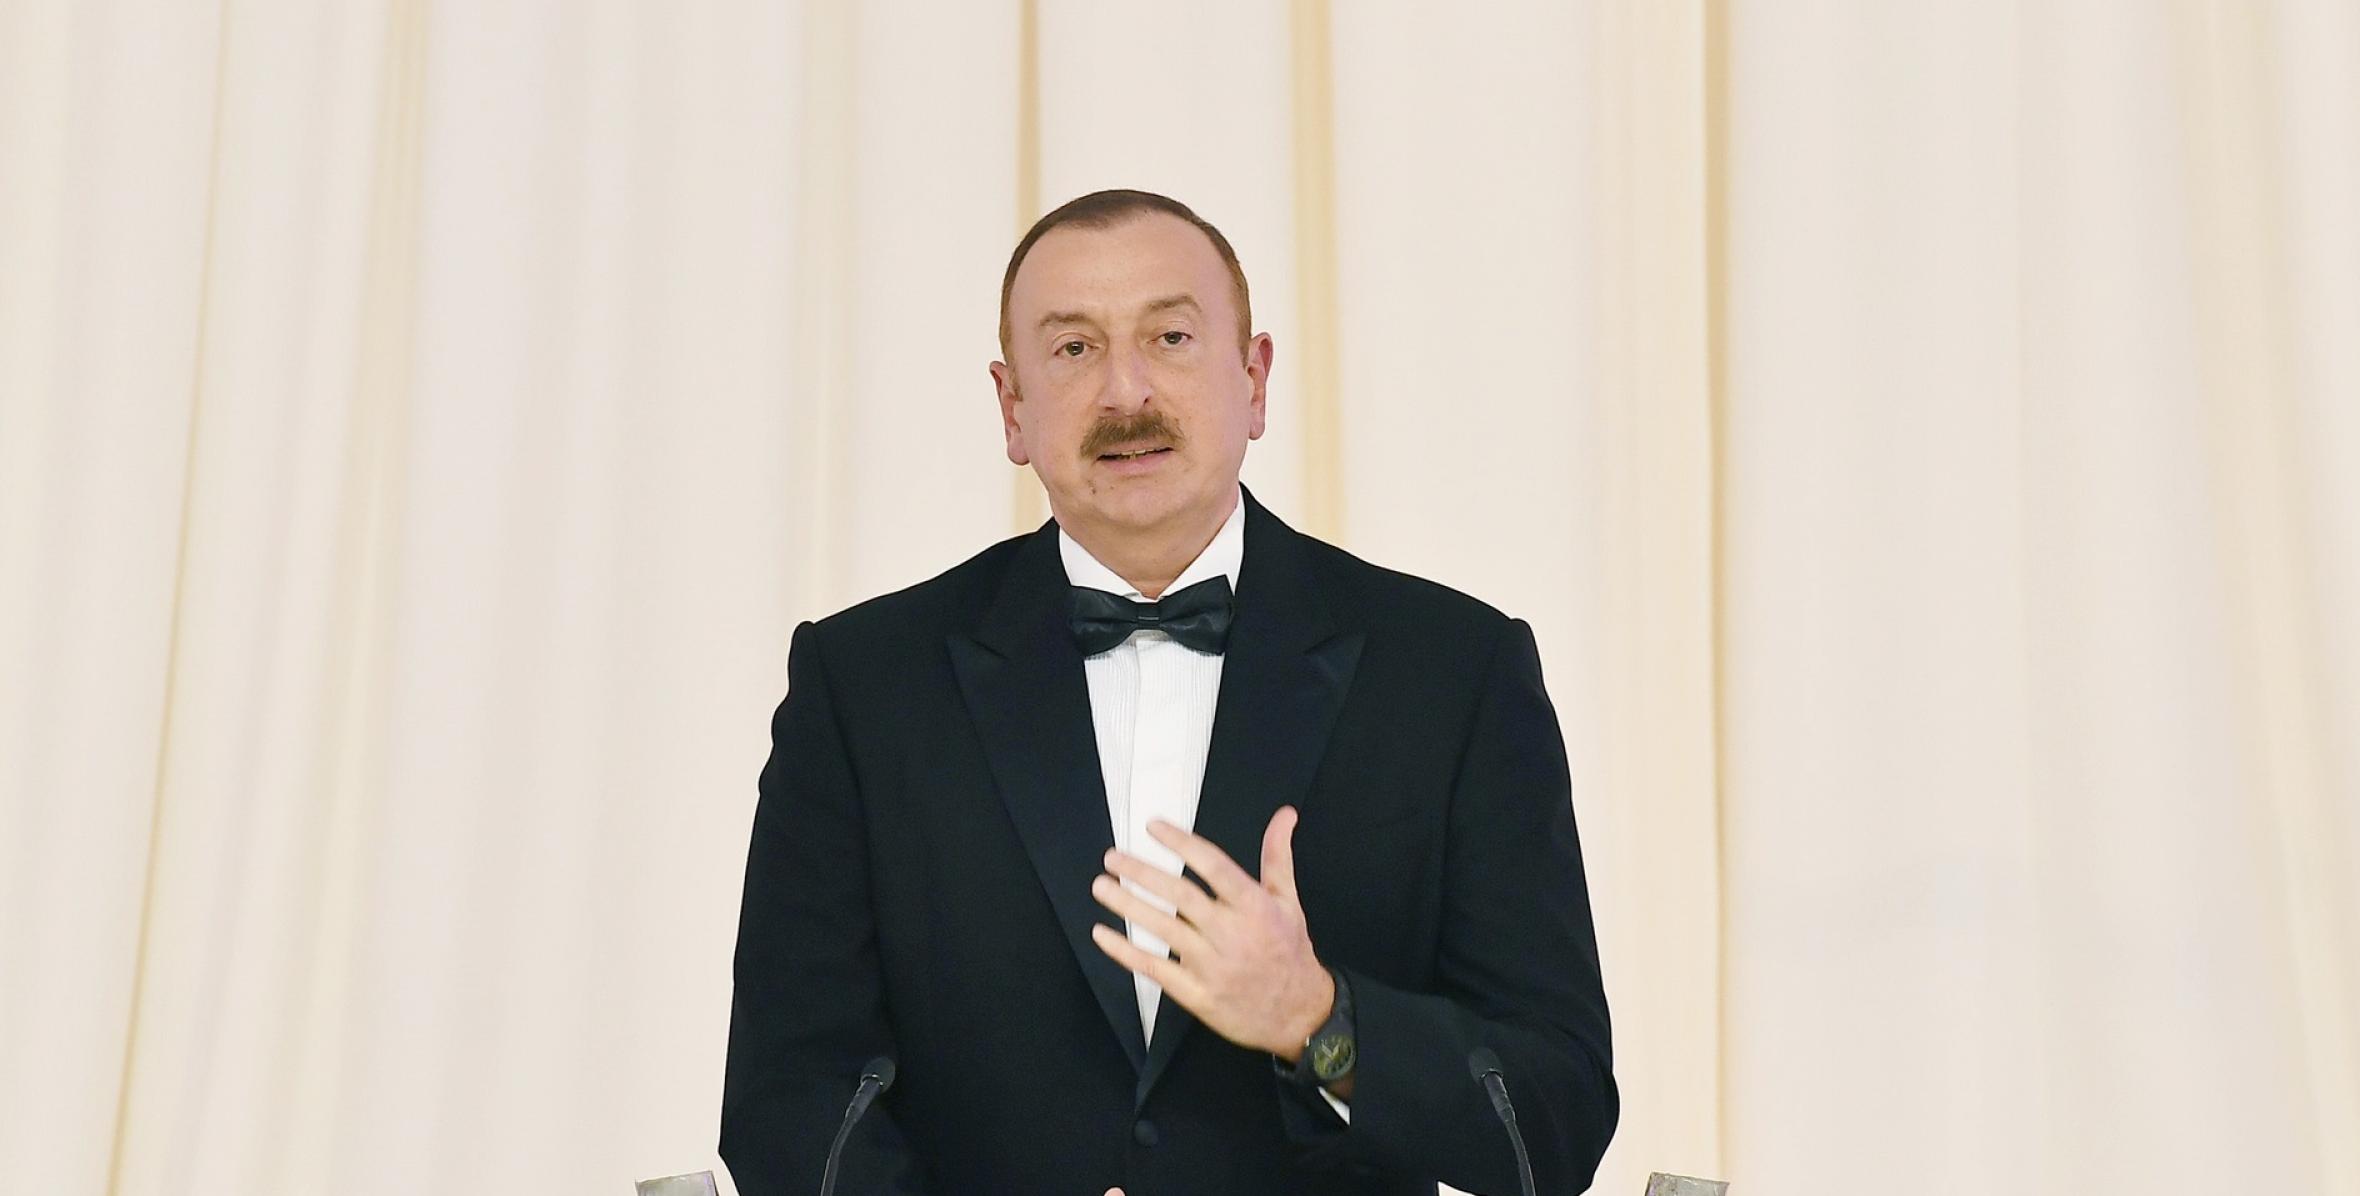 Speech by Ilham Aliyev at the solemn ceremony to mark 95th anniversary of national leader Heydar Aliyev